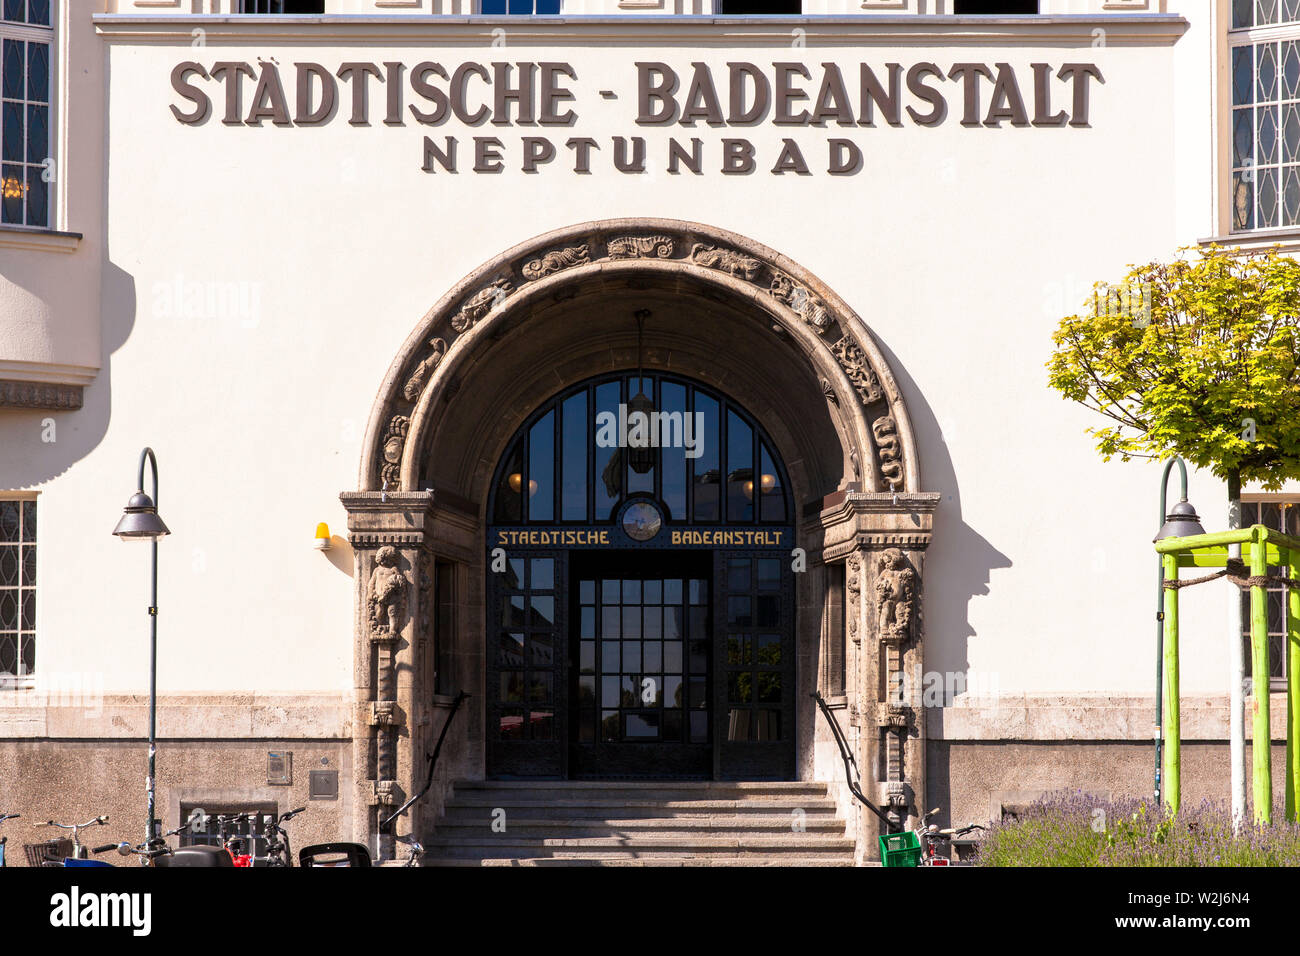 portal of the swimming baths Neptunbad in the district Ehrenfeld, Cologne, Germany.  Portal des Neptunbad  im Stadtteil Ehrenfeld, Koeln, Deutschland. Stock Photo